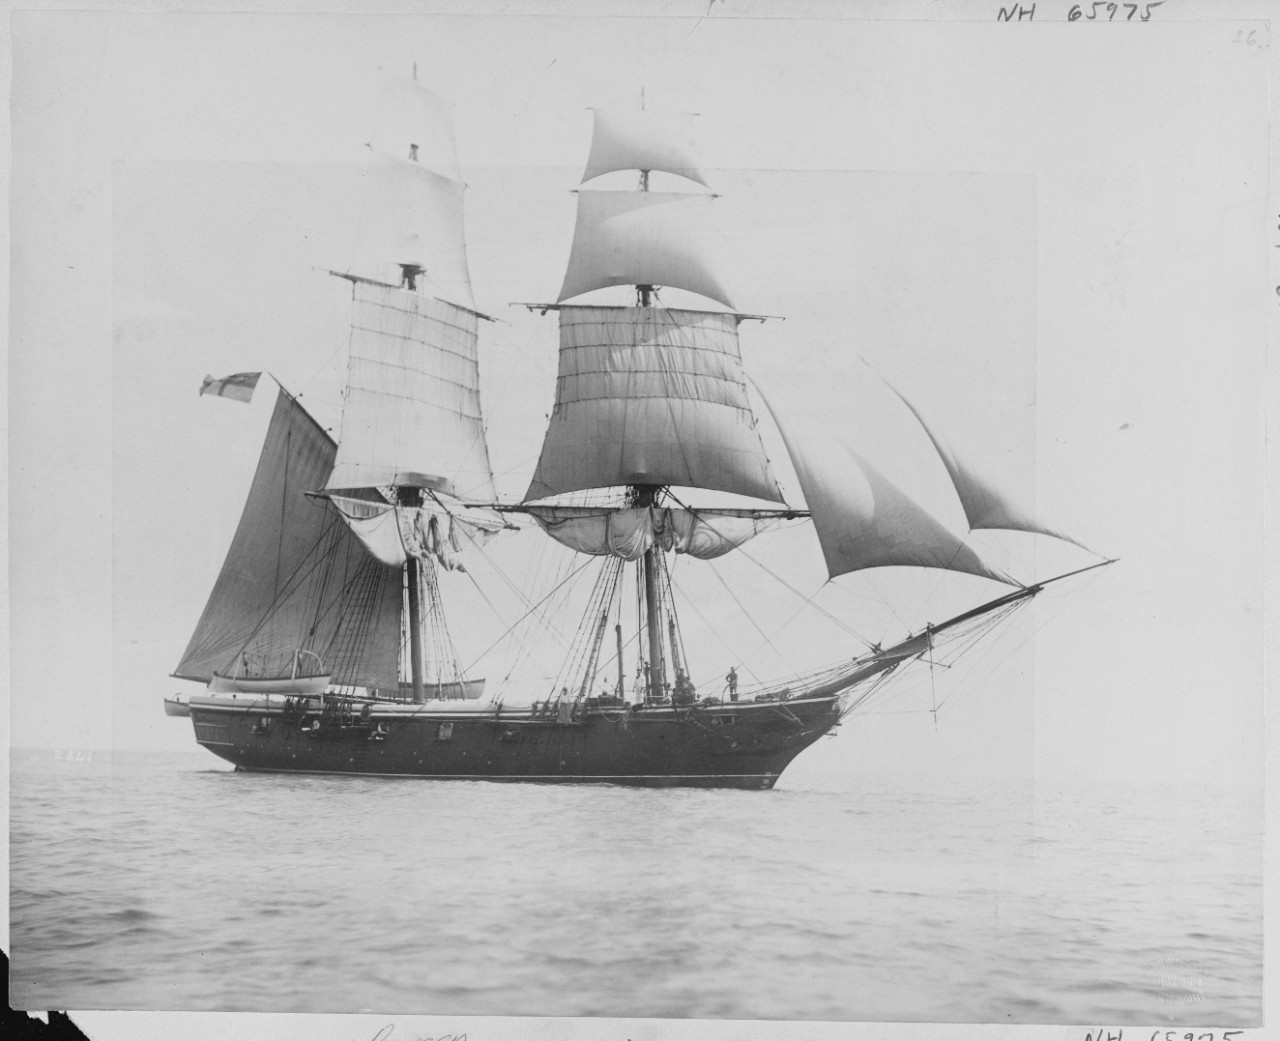 HMS MARTIN (British training brig, launched in 1850)